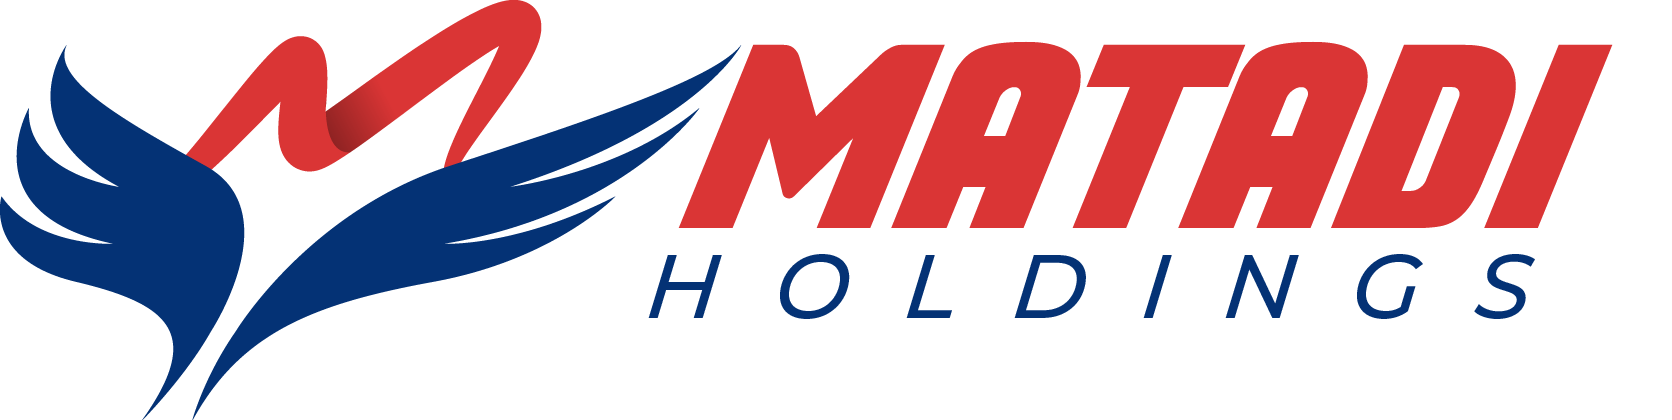 Matadi Holdings